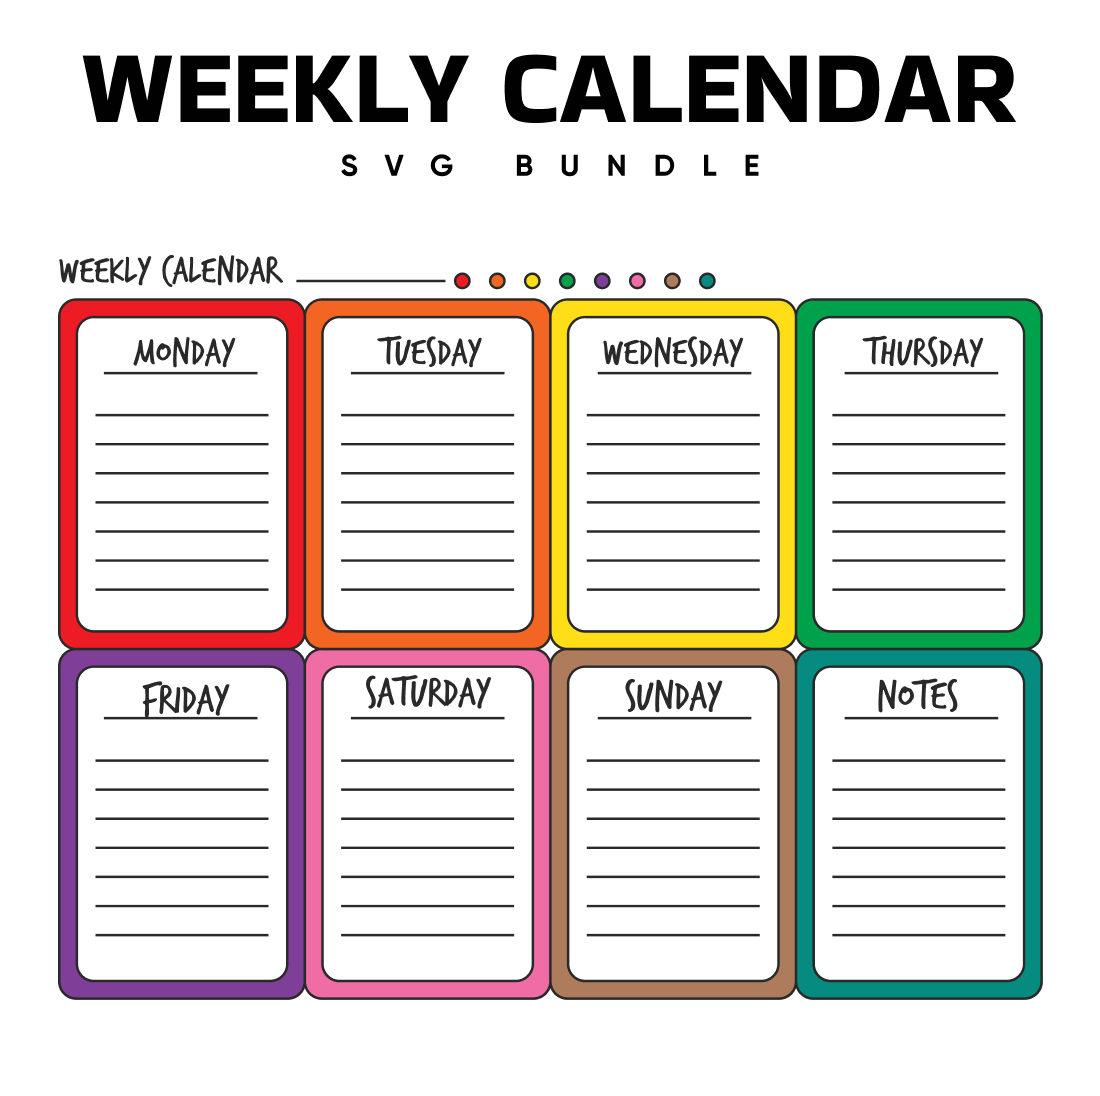 Weekly Calendar SVG.